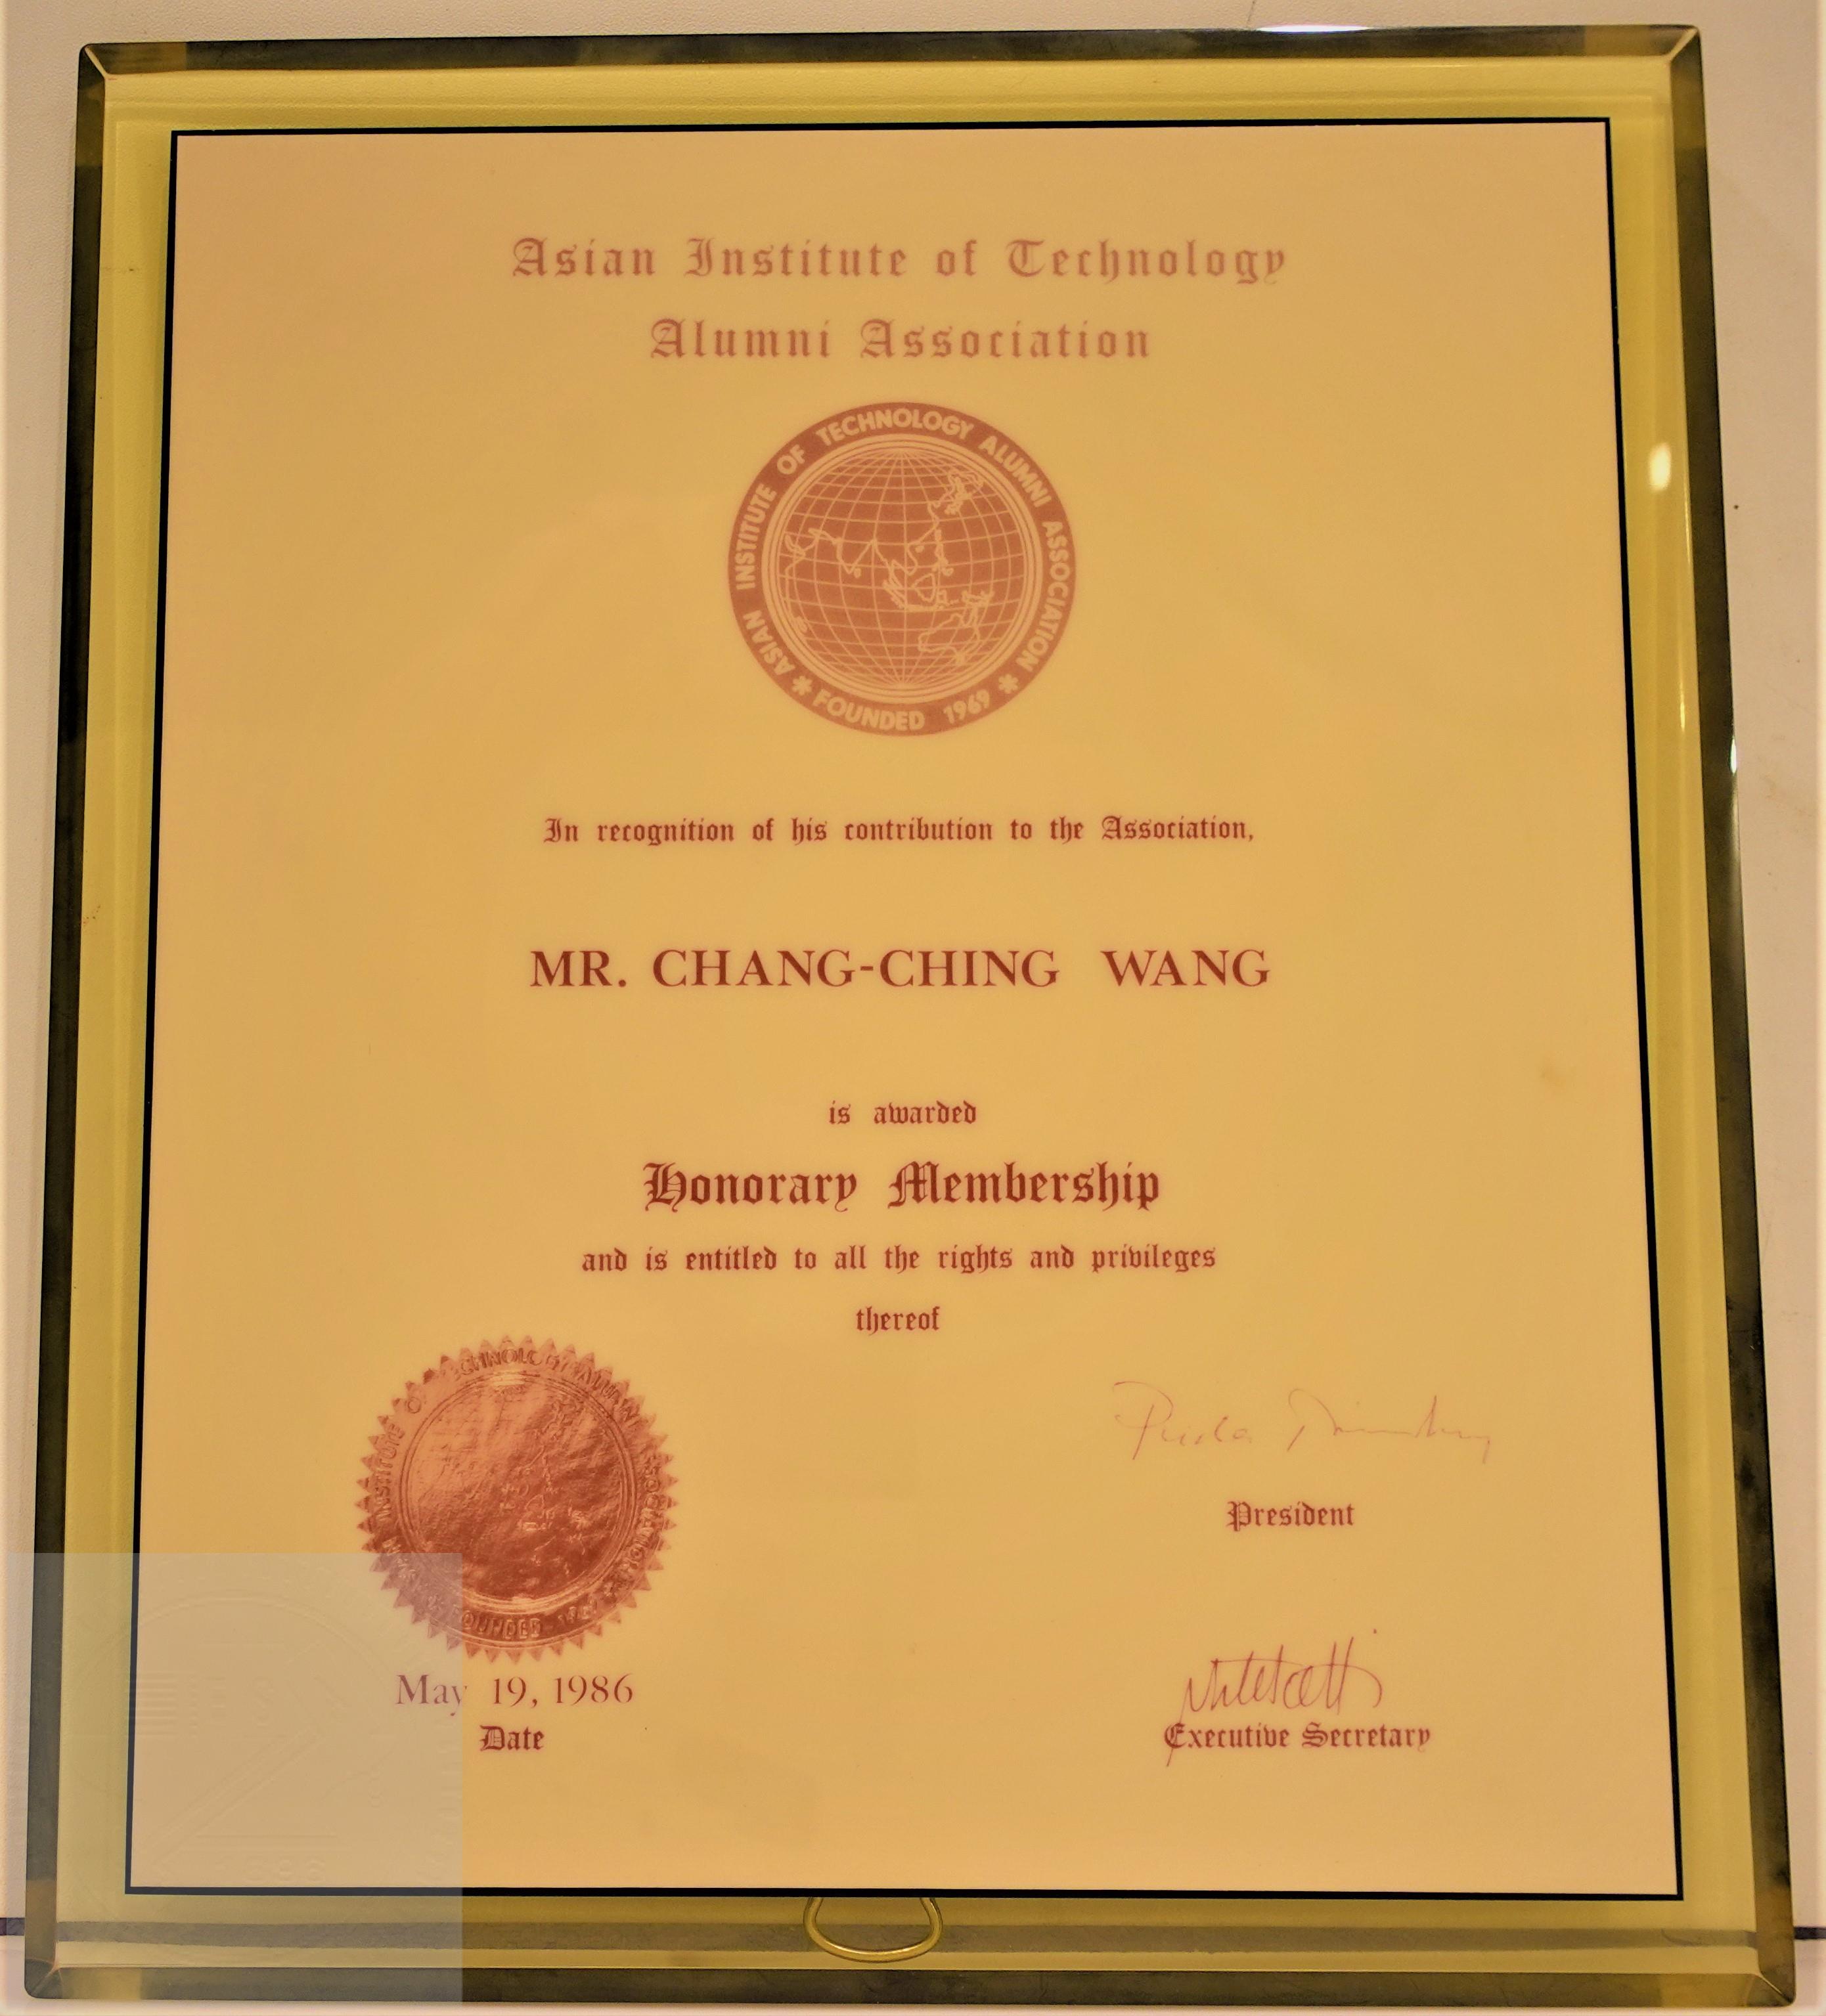 Asian Institute of Technology (AIT) Alumni Association 亞洲理工學院校友會榮譽會員勳獎證書牌 (Mr. Chang-Ching Wang)